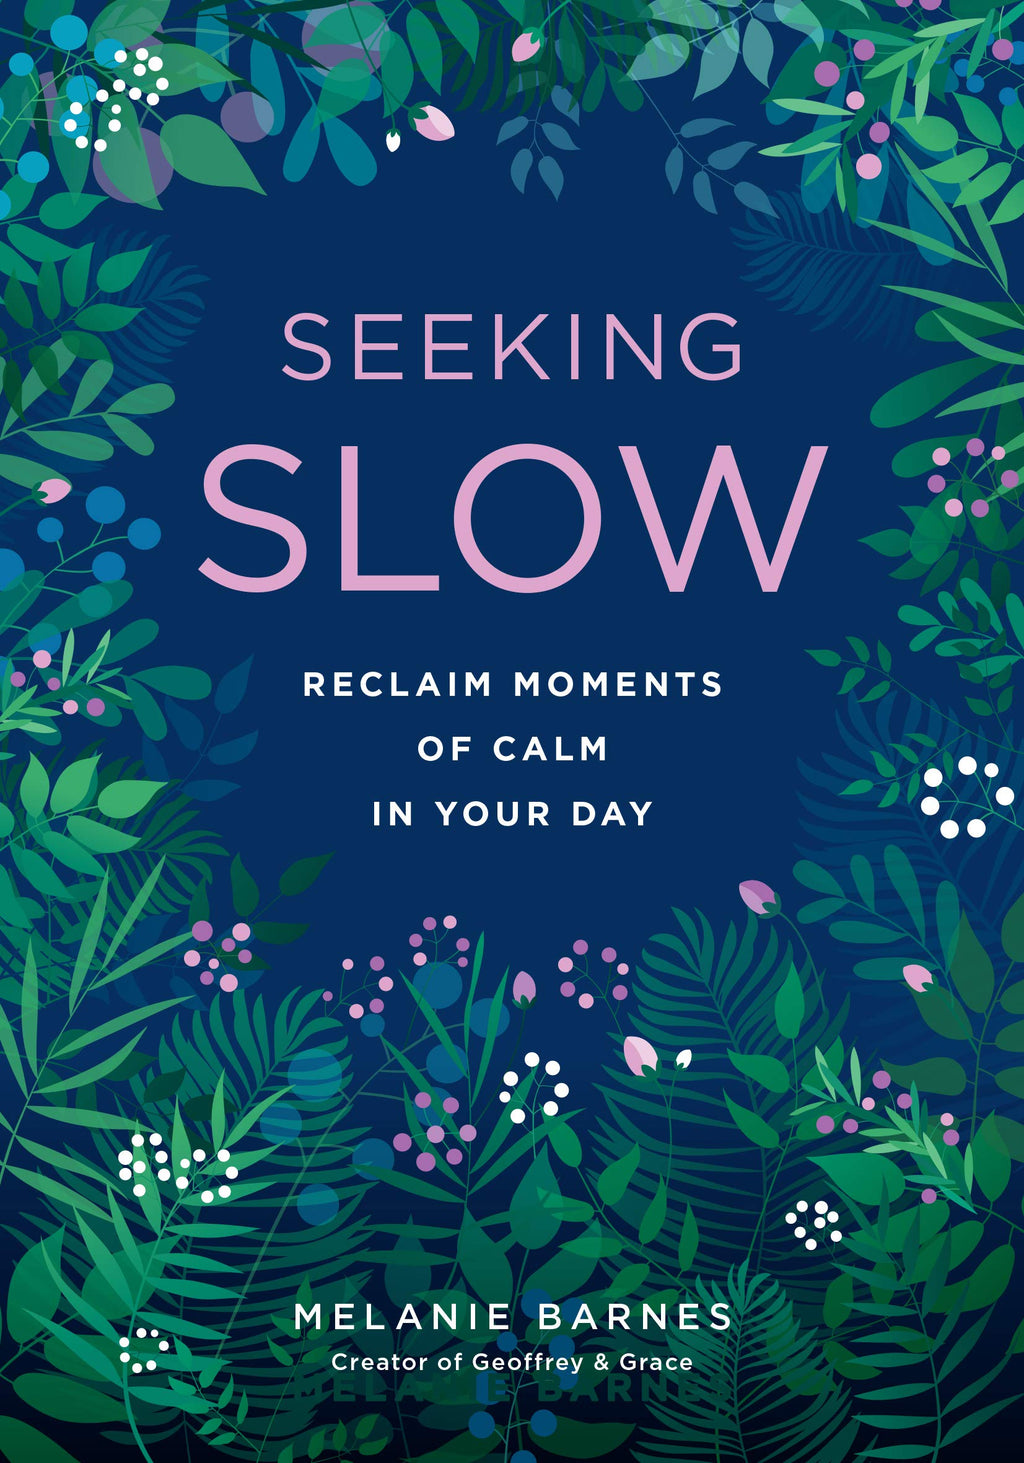 Seeking Slow by Melanie Barnes